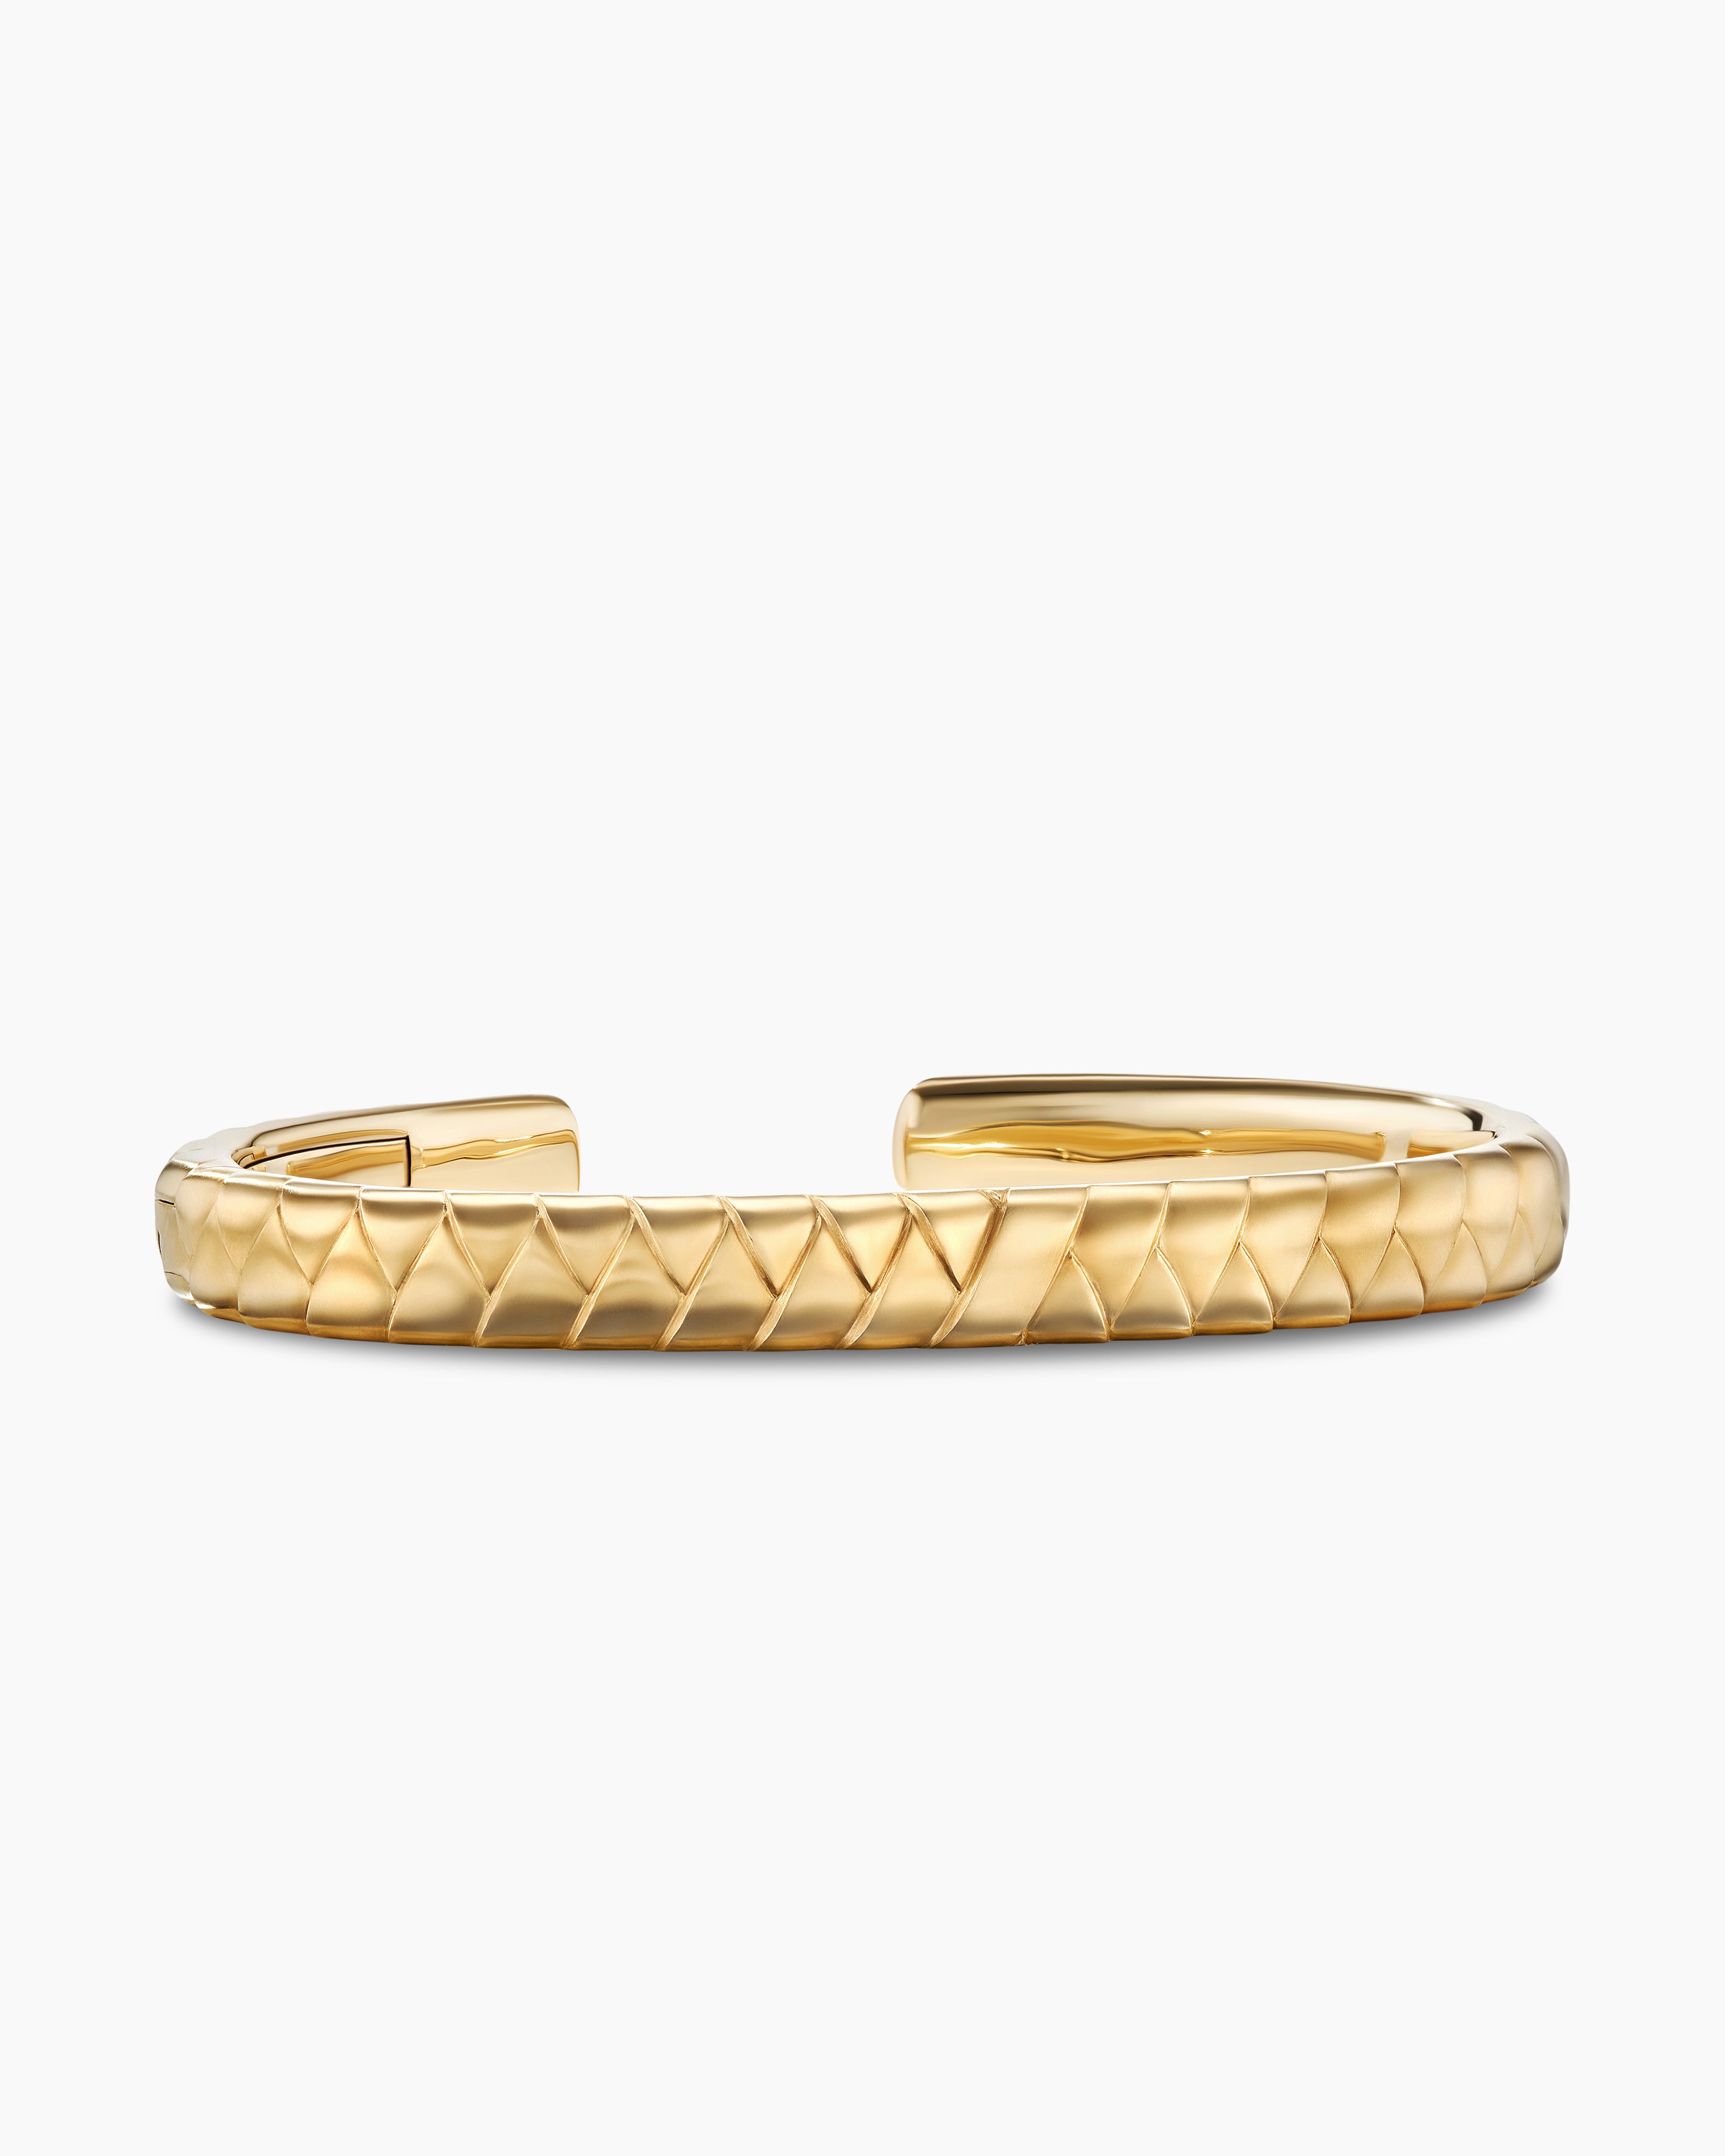 David Yurman Men's Cairo Wrap Cuff Bracelet in 18K Yellow Gold, 8mm